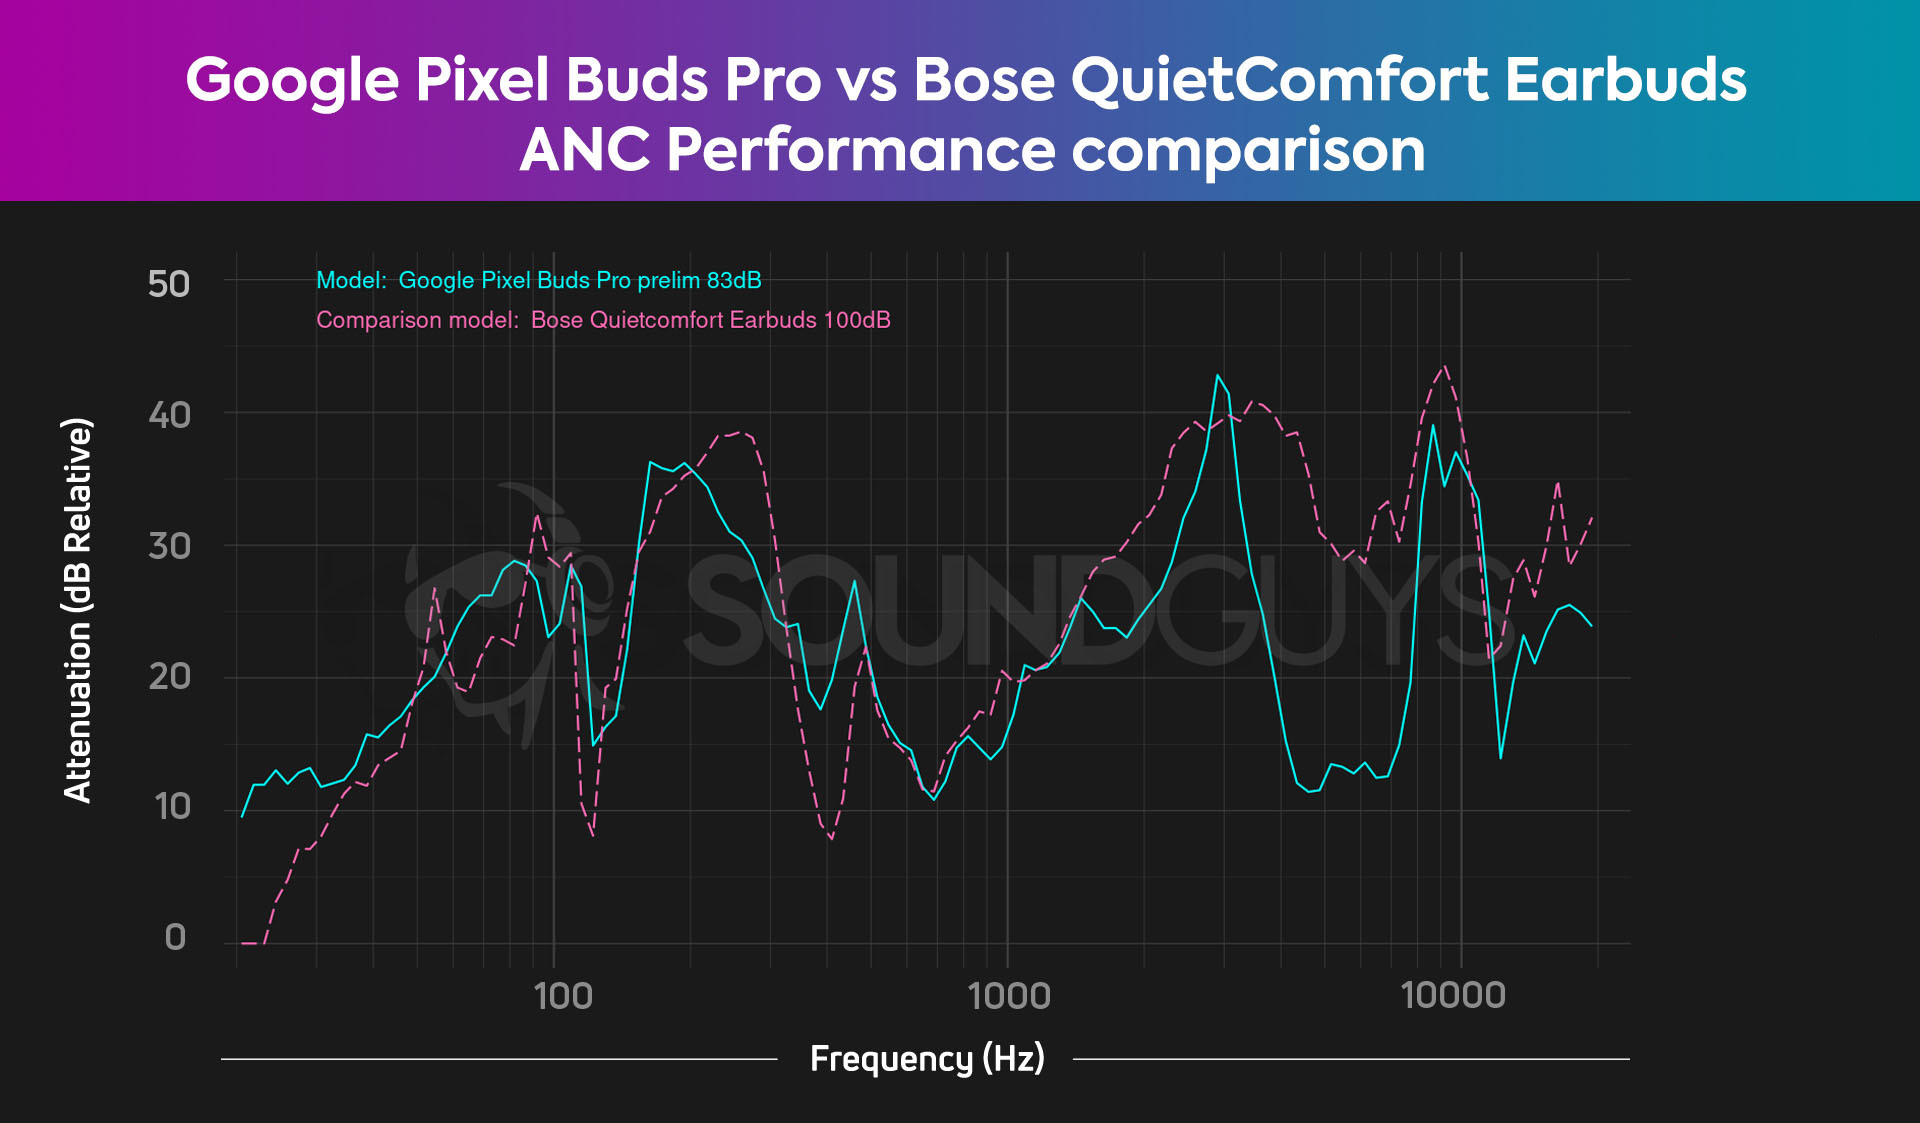 Google Pixel Buds Pro vs Bose QuietComfort Earbuds active noise canceling chart.